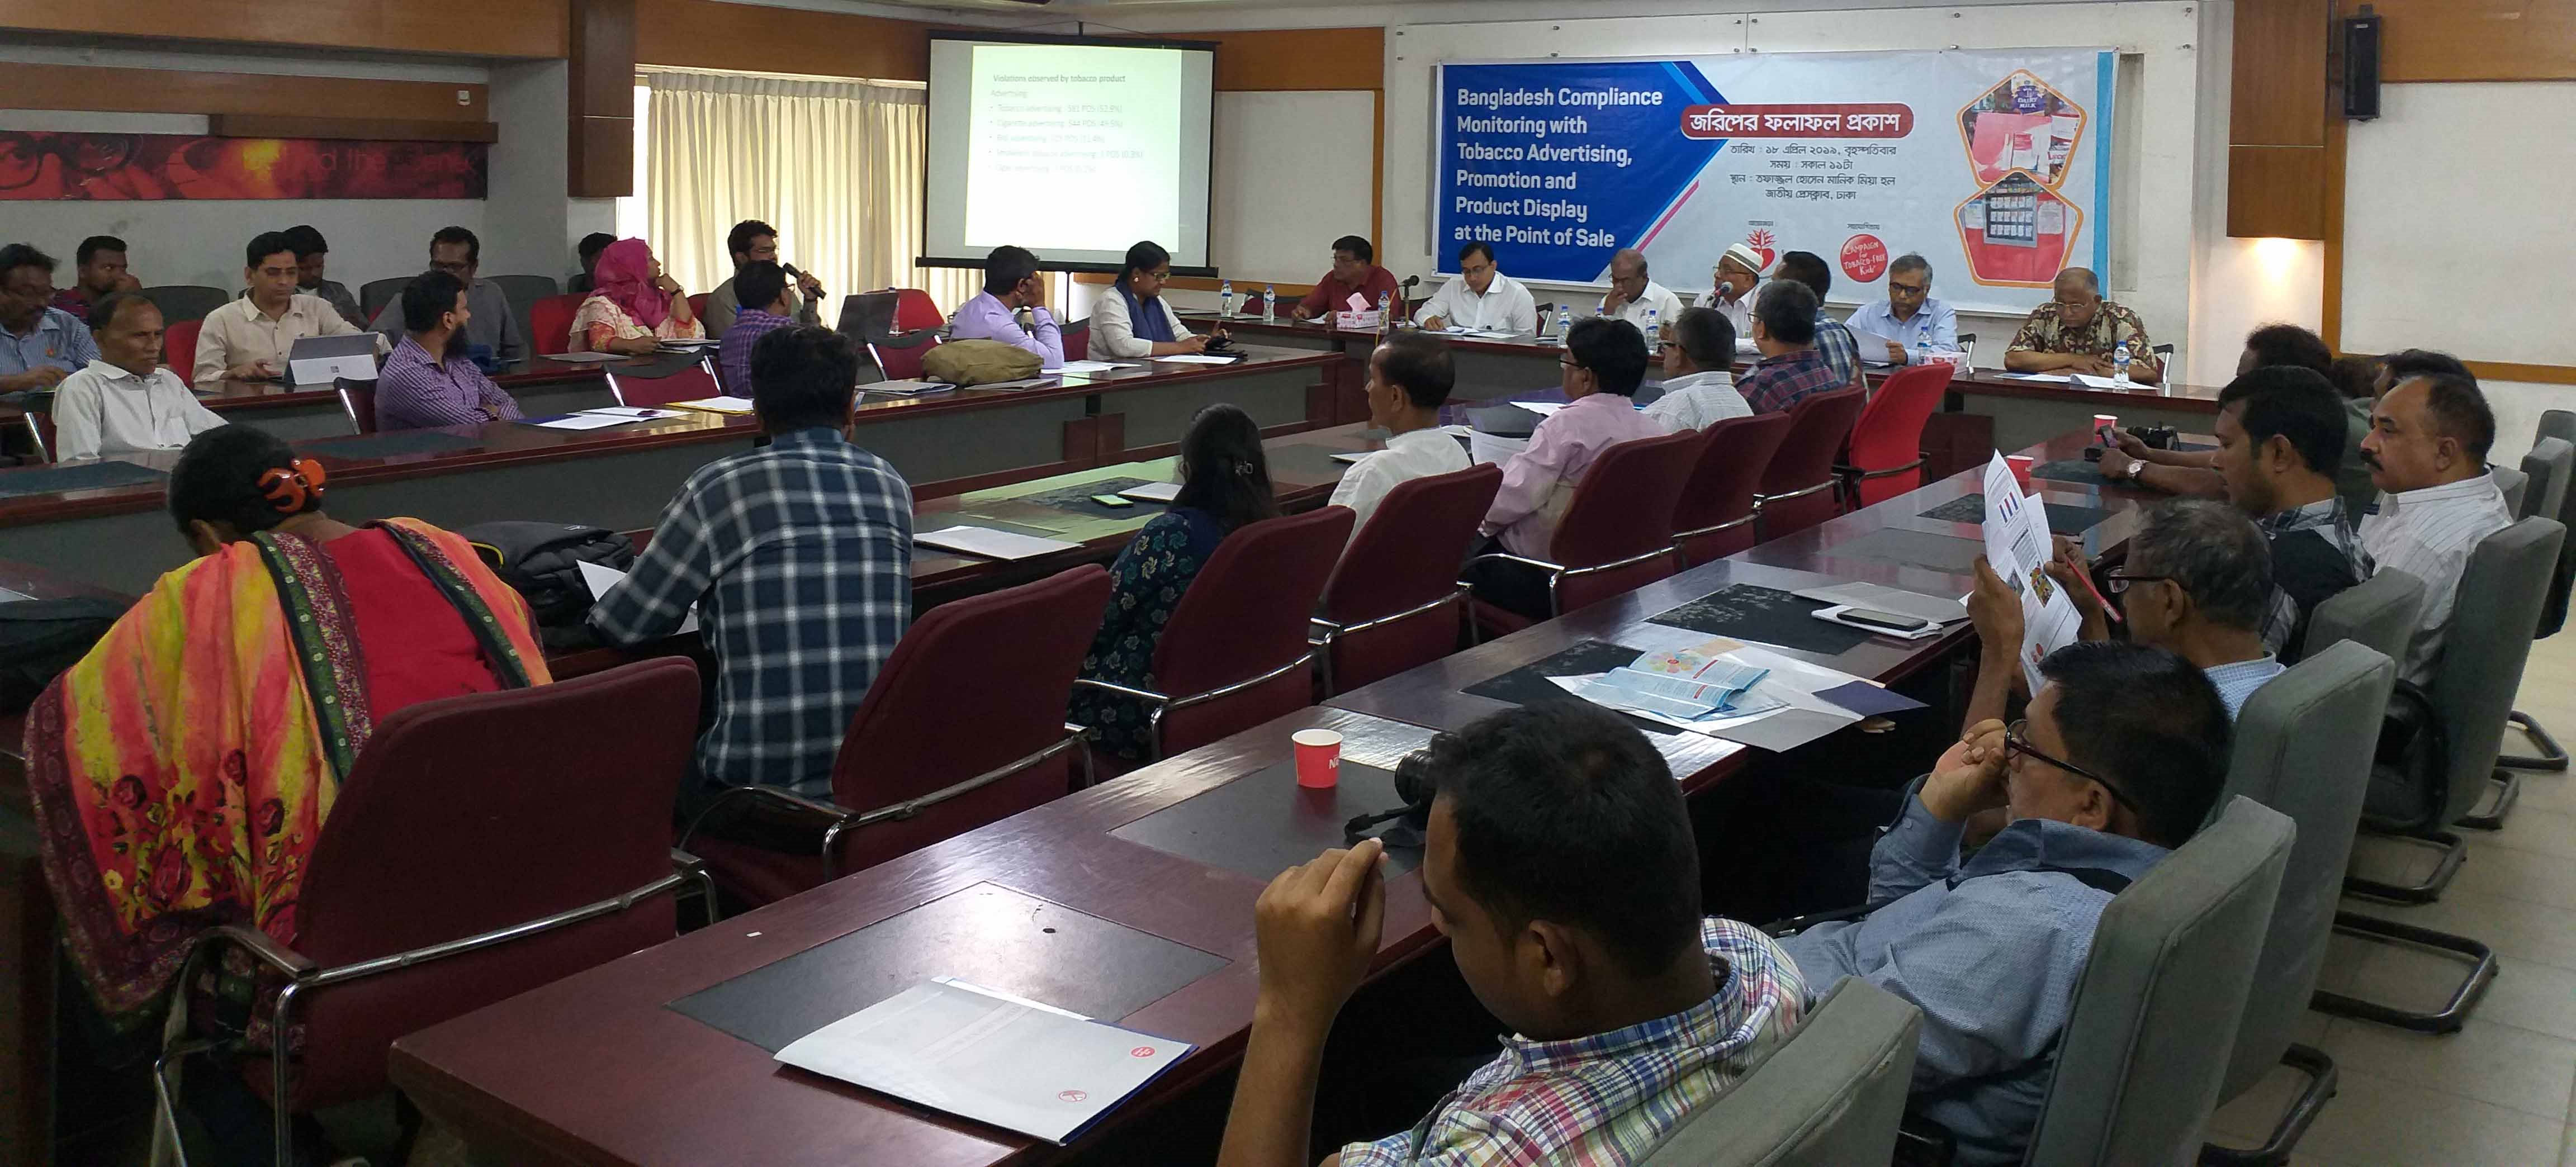 Bangladesh Network for NCD Control & Prevention